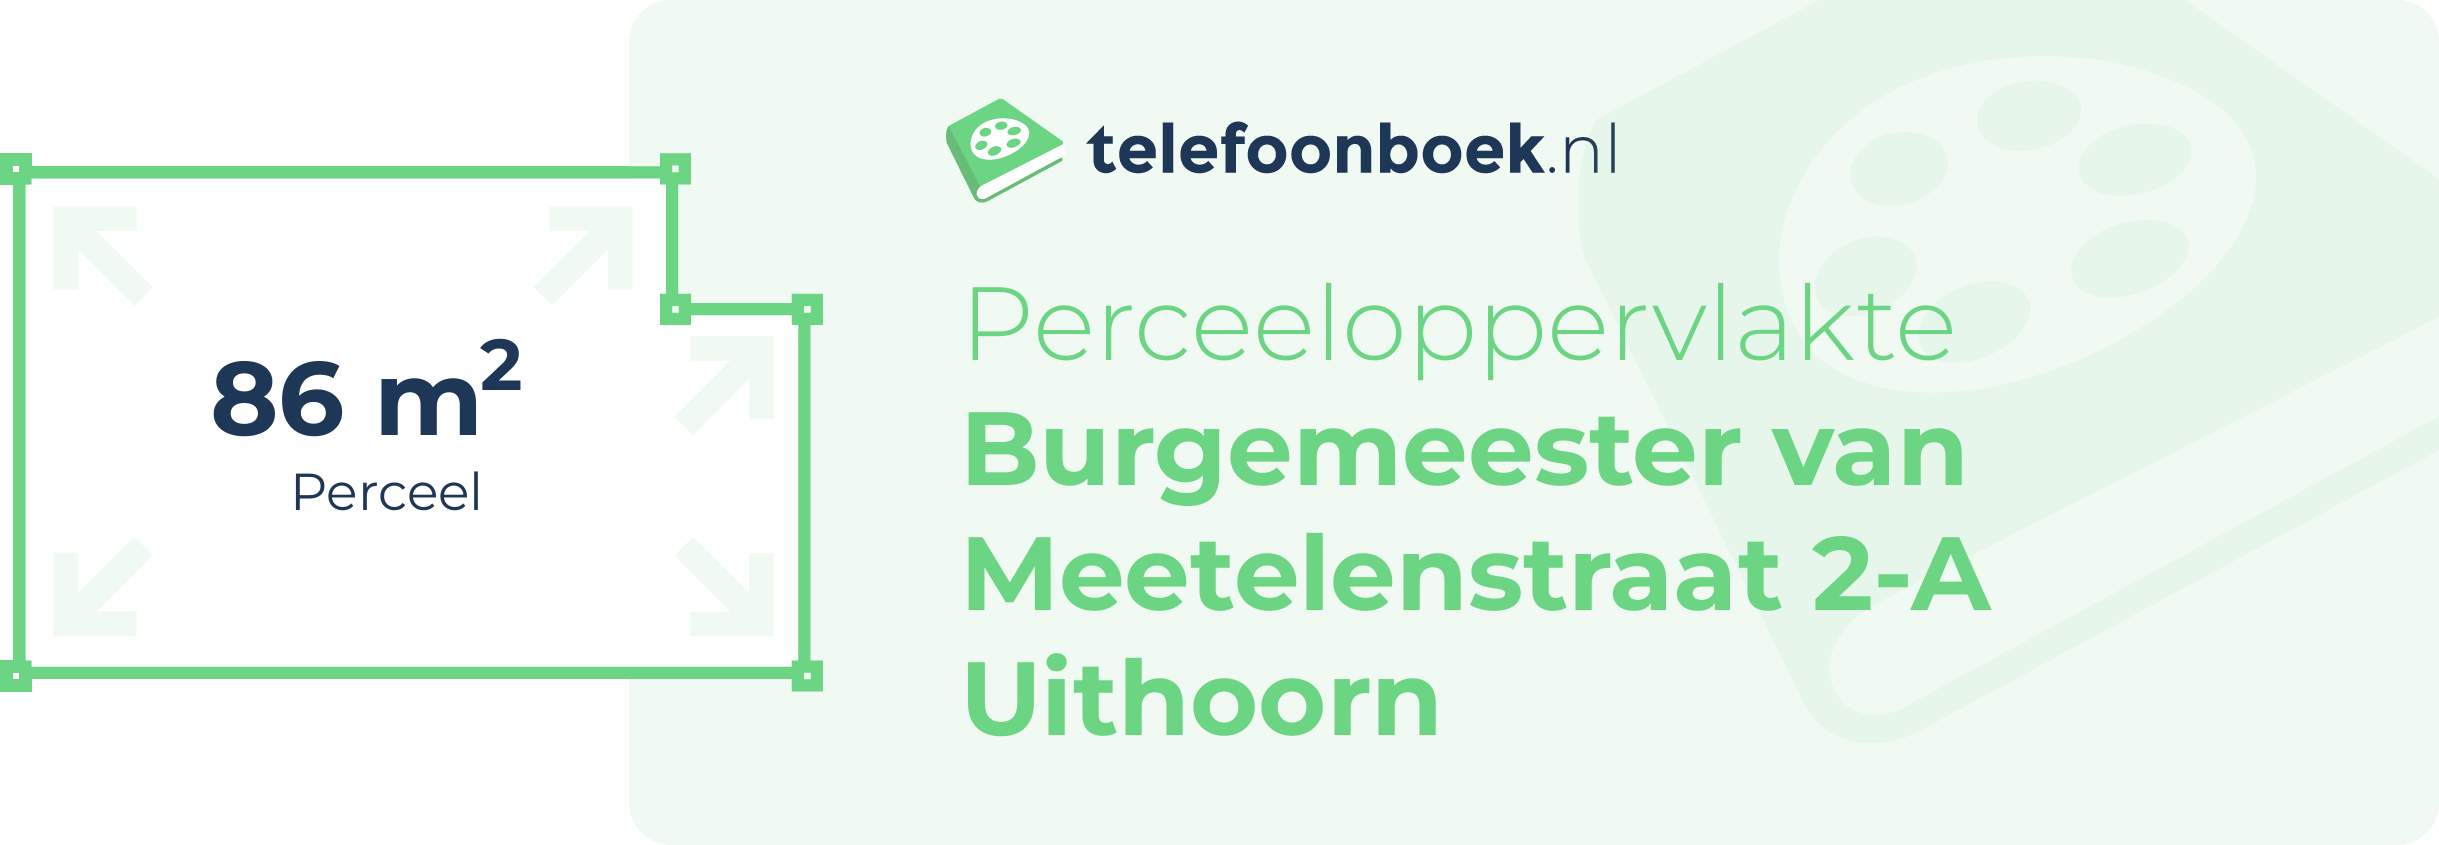 Perceeloppervlakte Burgemeester Van Meetelenstraat 2-A Uithoorn